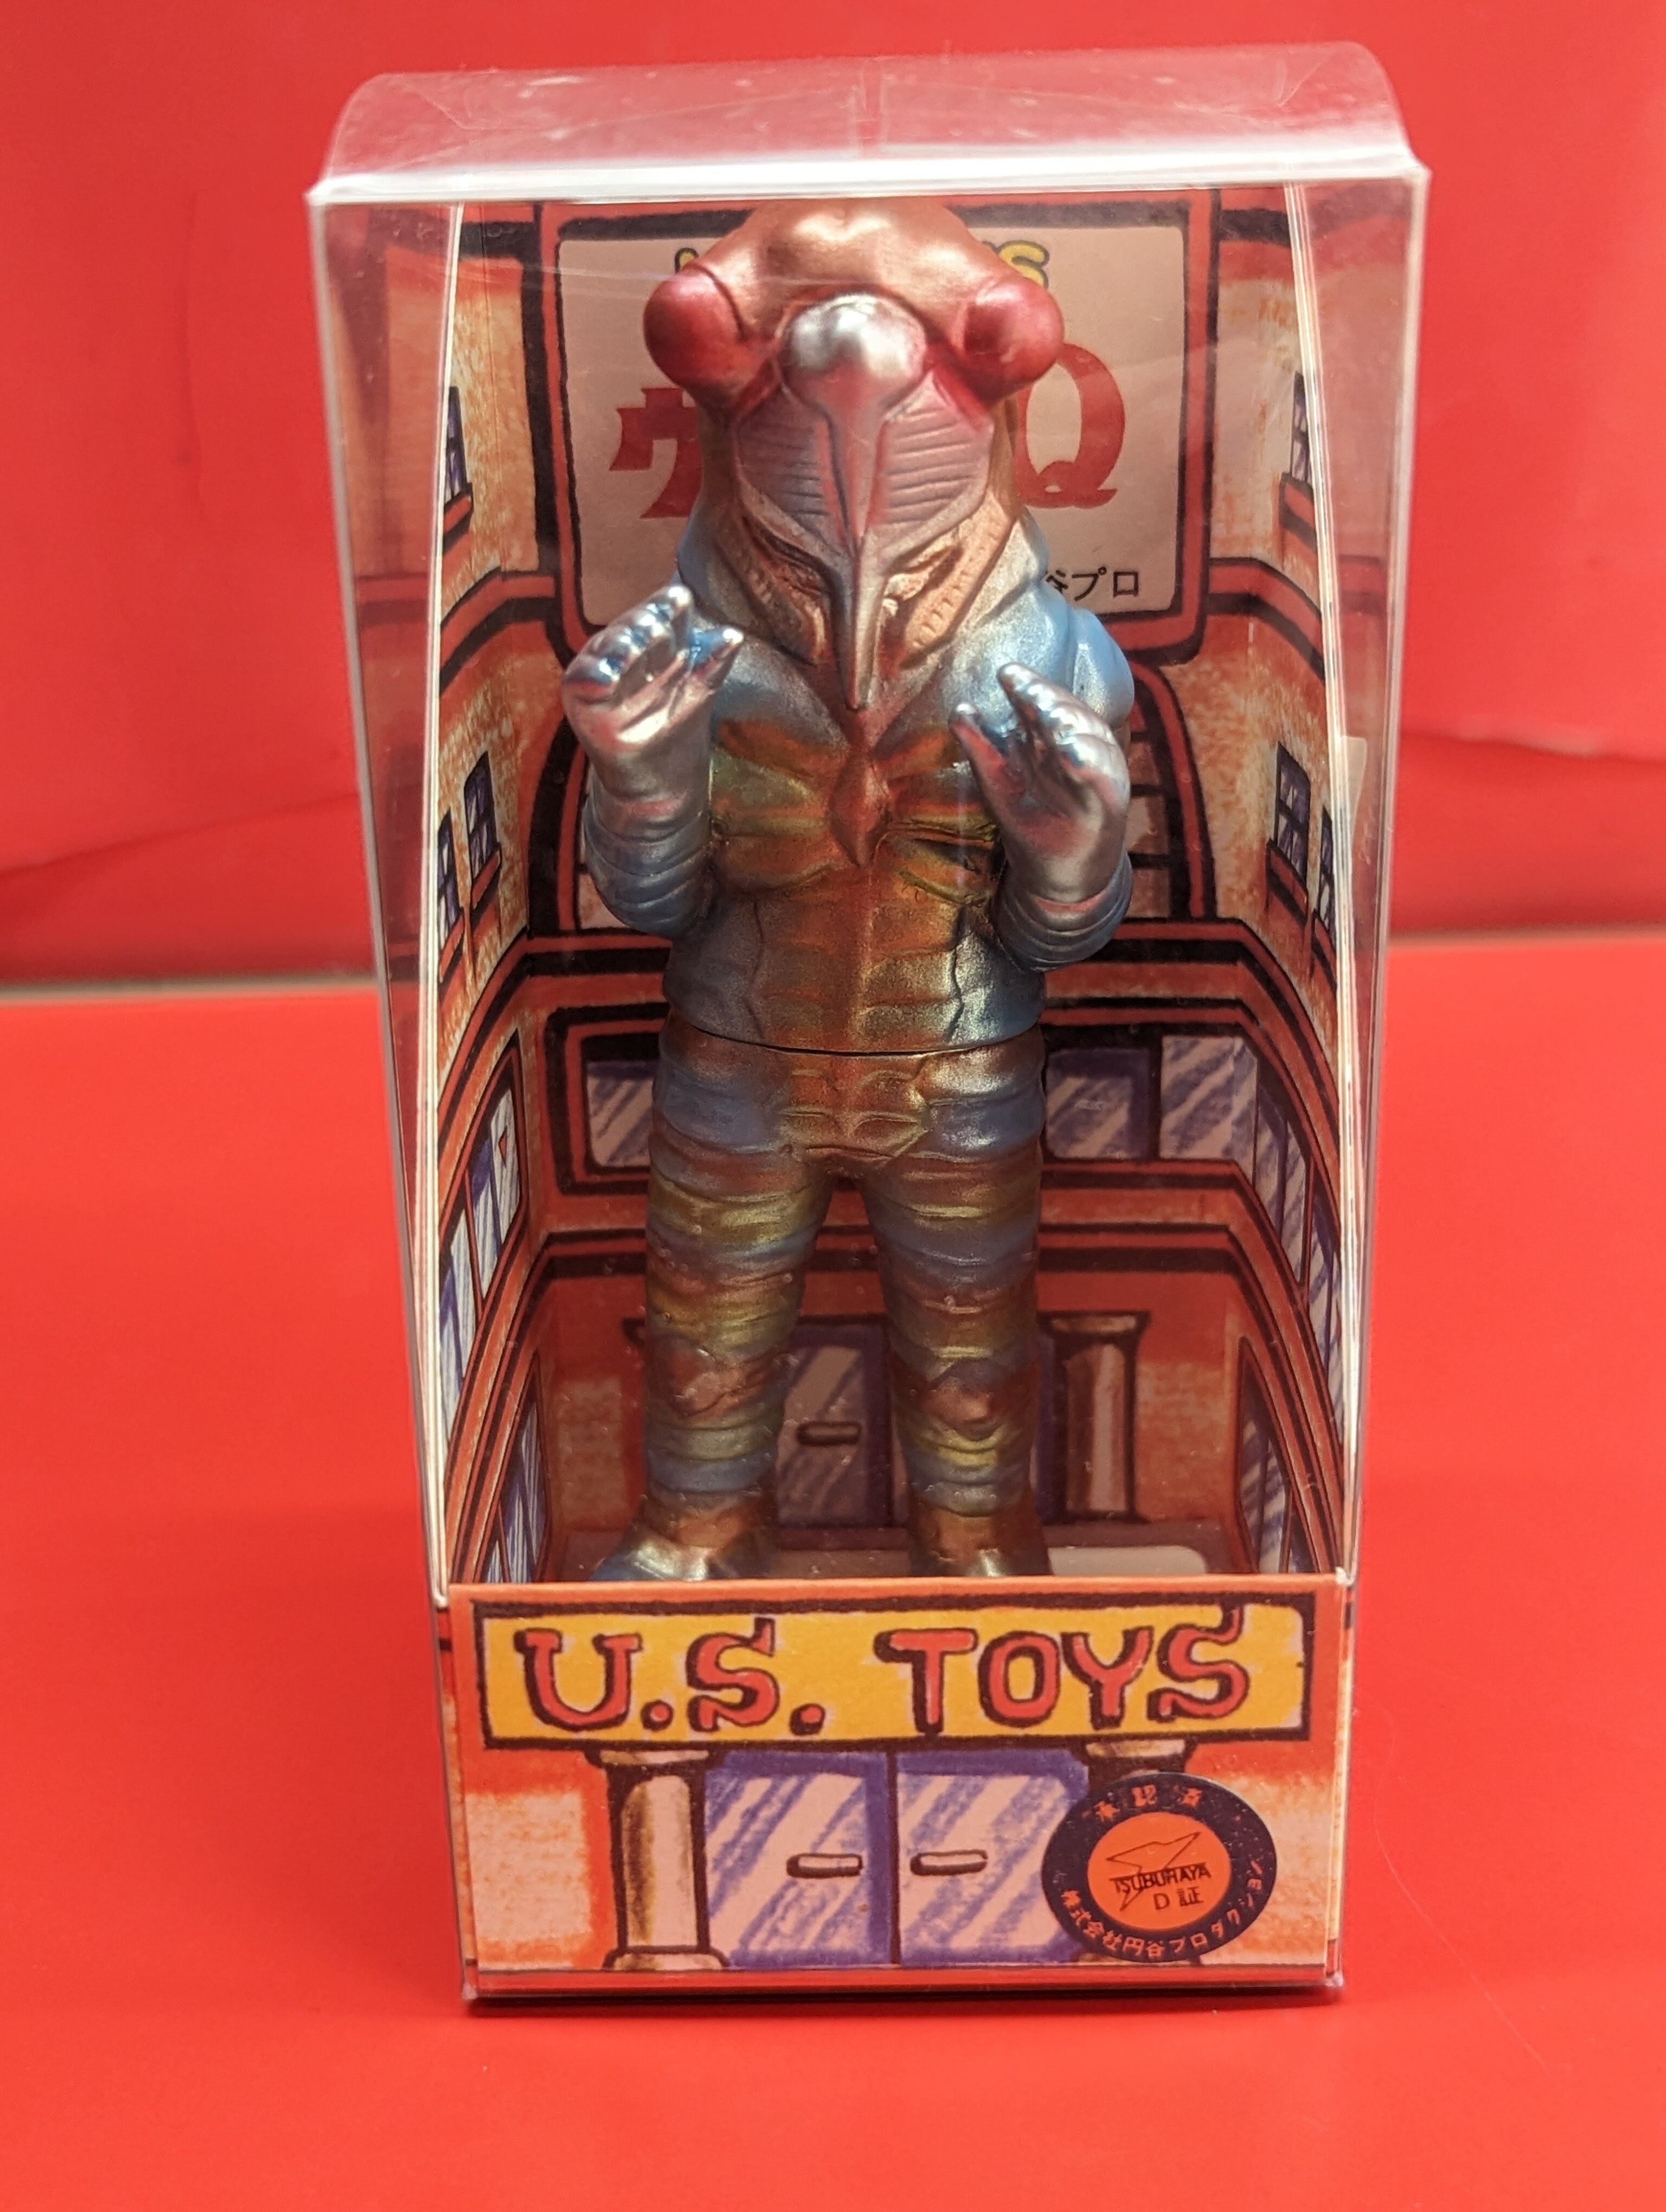 U.S.TOYS ビル箱怪獣シリーズ セミ人間 水色成型/金 | ありある 